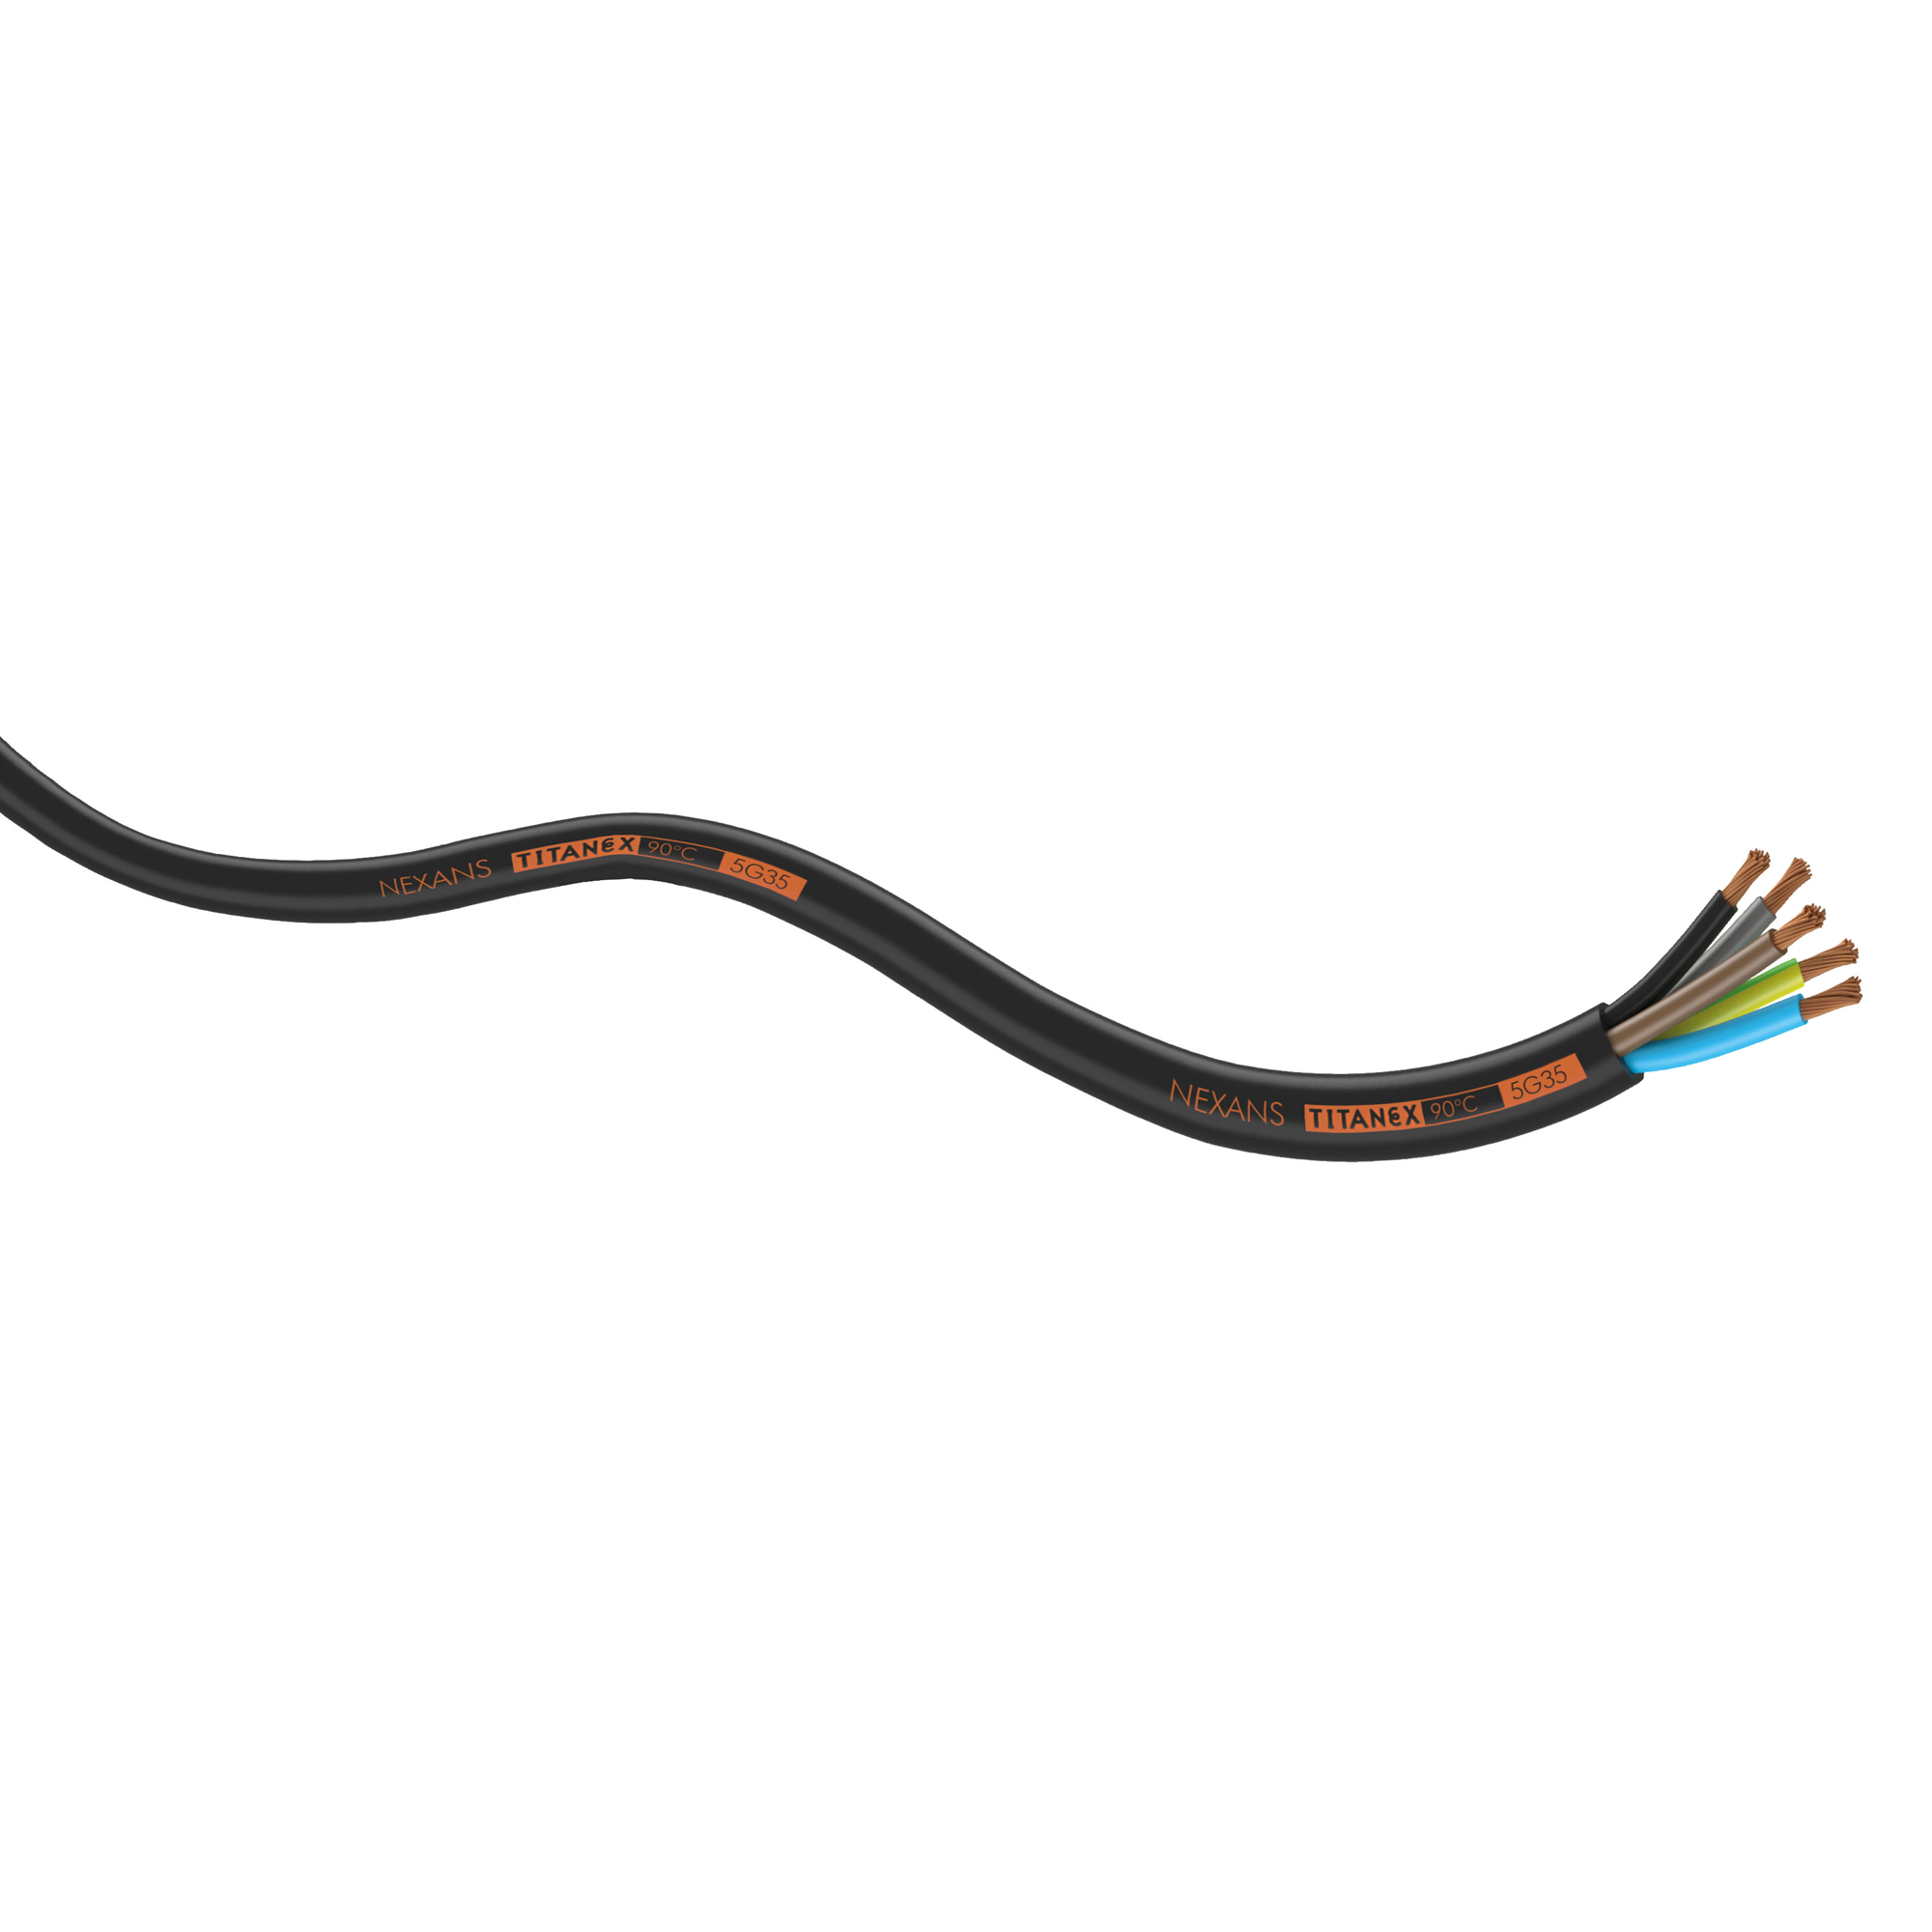 Titanex Titanex Neoprene Cable, Black Mindestbestellung 1 m/5 x 2,5 mm2